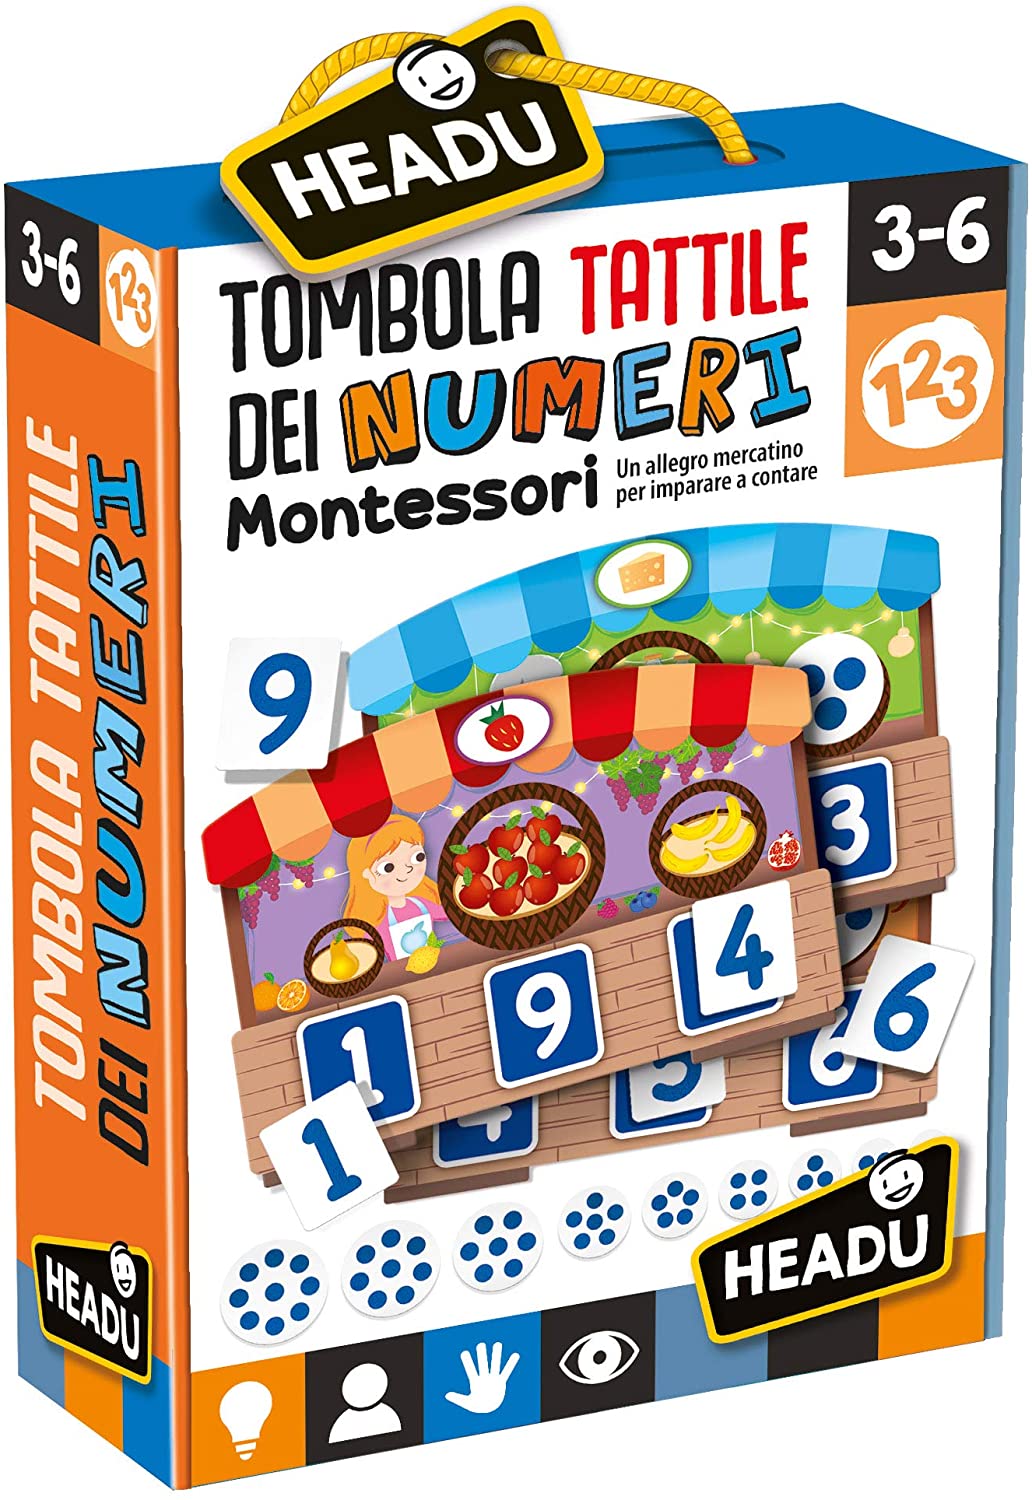 Tombola Tattile Montessori HEADU 